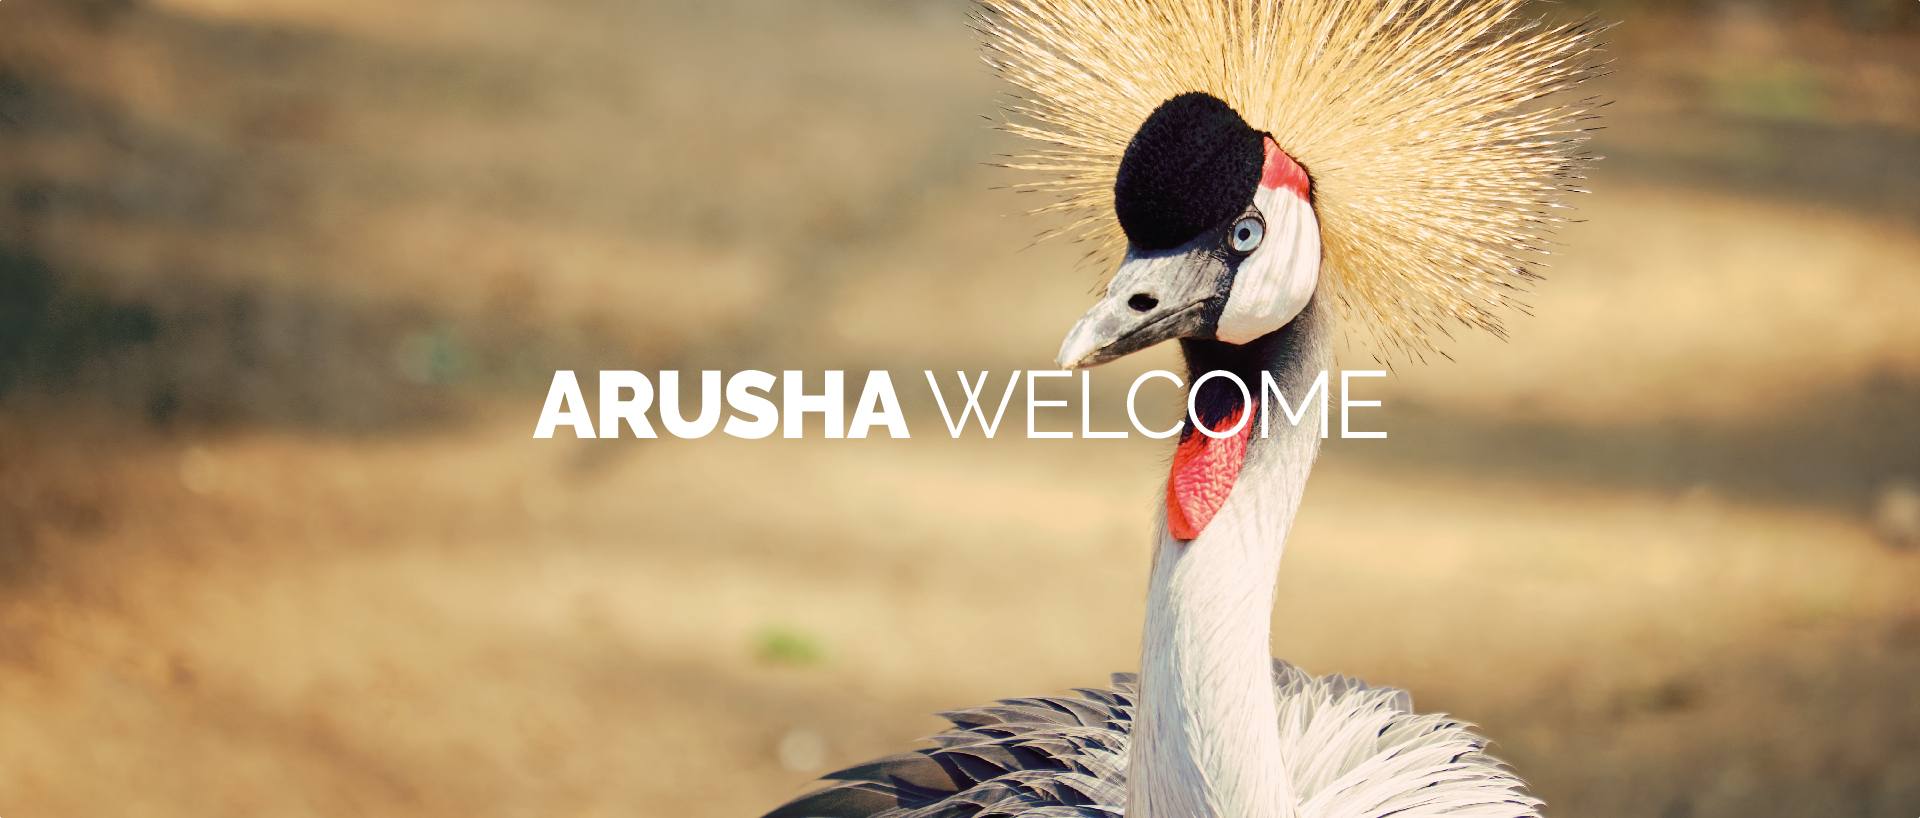 ARUSHA WELCOME